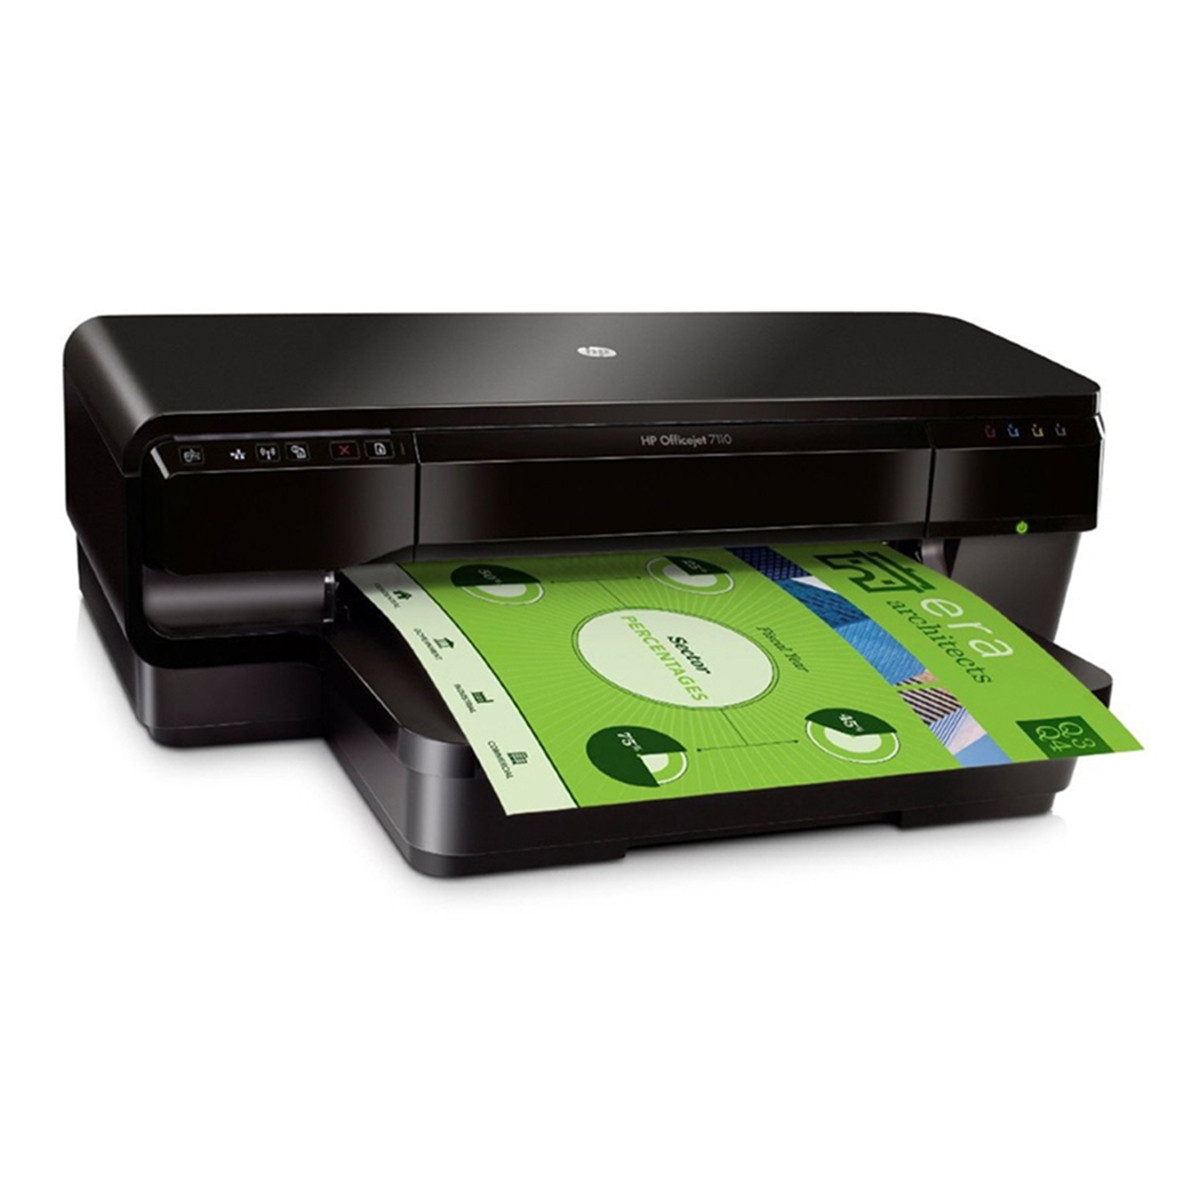 Impressora HP OfficeJet 7110 CR768A A3 Grande Formato com Wireless